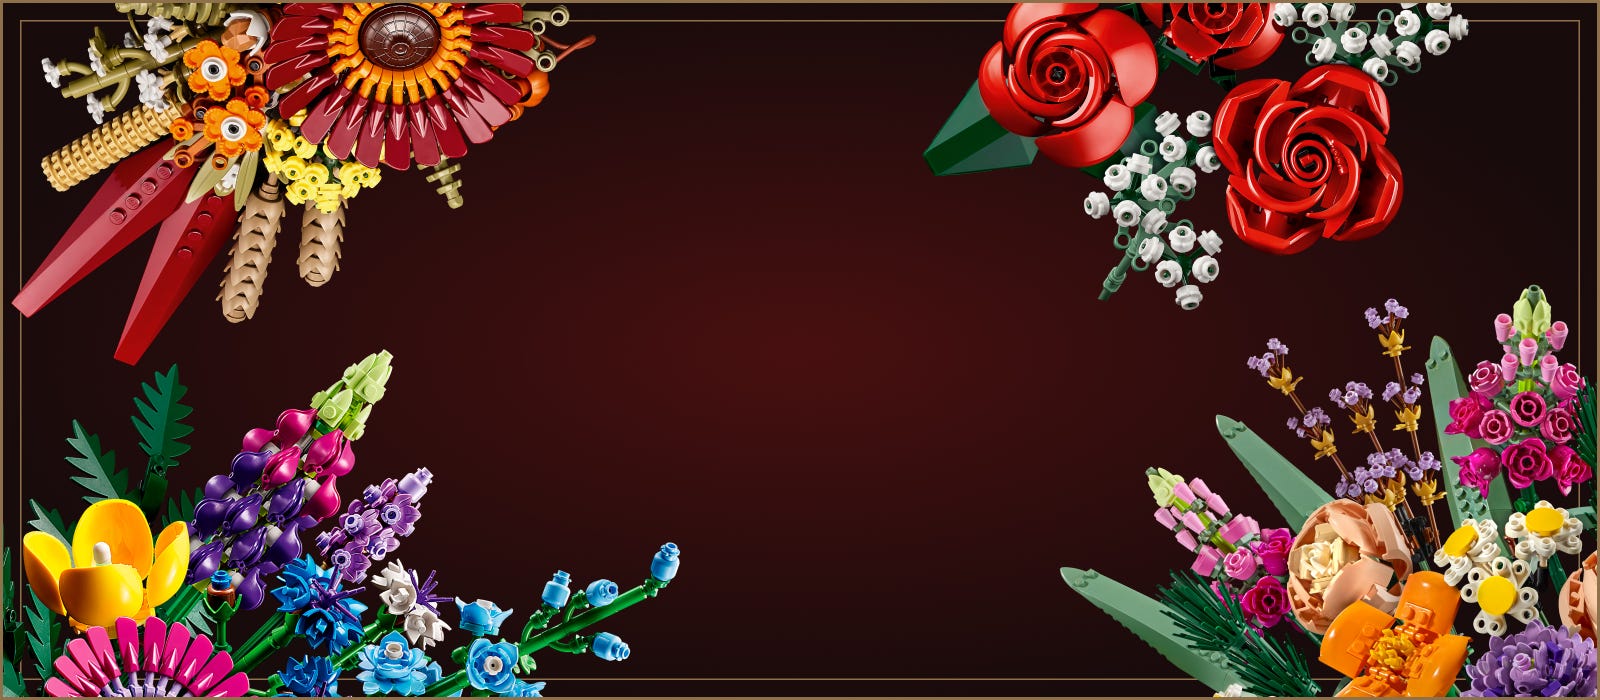 https://www.lego.com/cdn/cs/set/assets/blt27f04f7595df5ff3/01-Hero-Tall-Botanical_subpage-flowers-Desktop.jpg?fit=crop&format=jpg&quality=80&width=1600&height=700&dpr=1